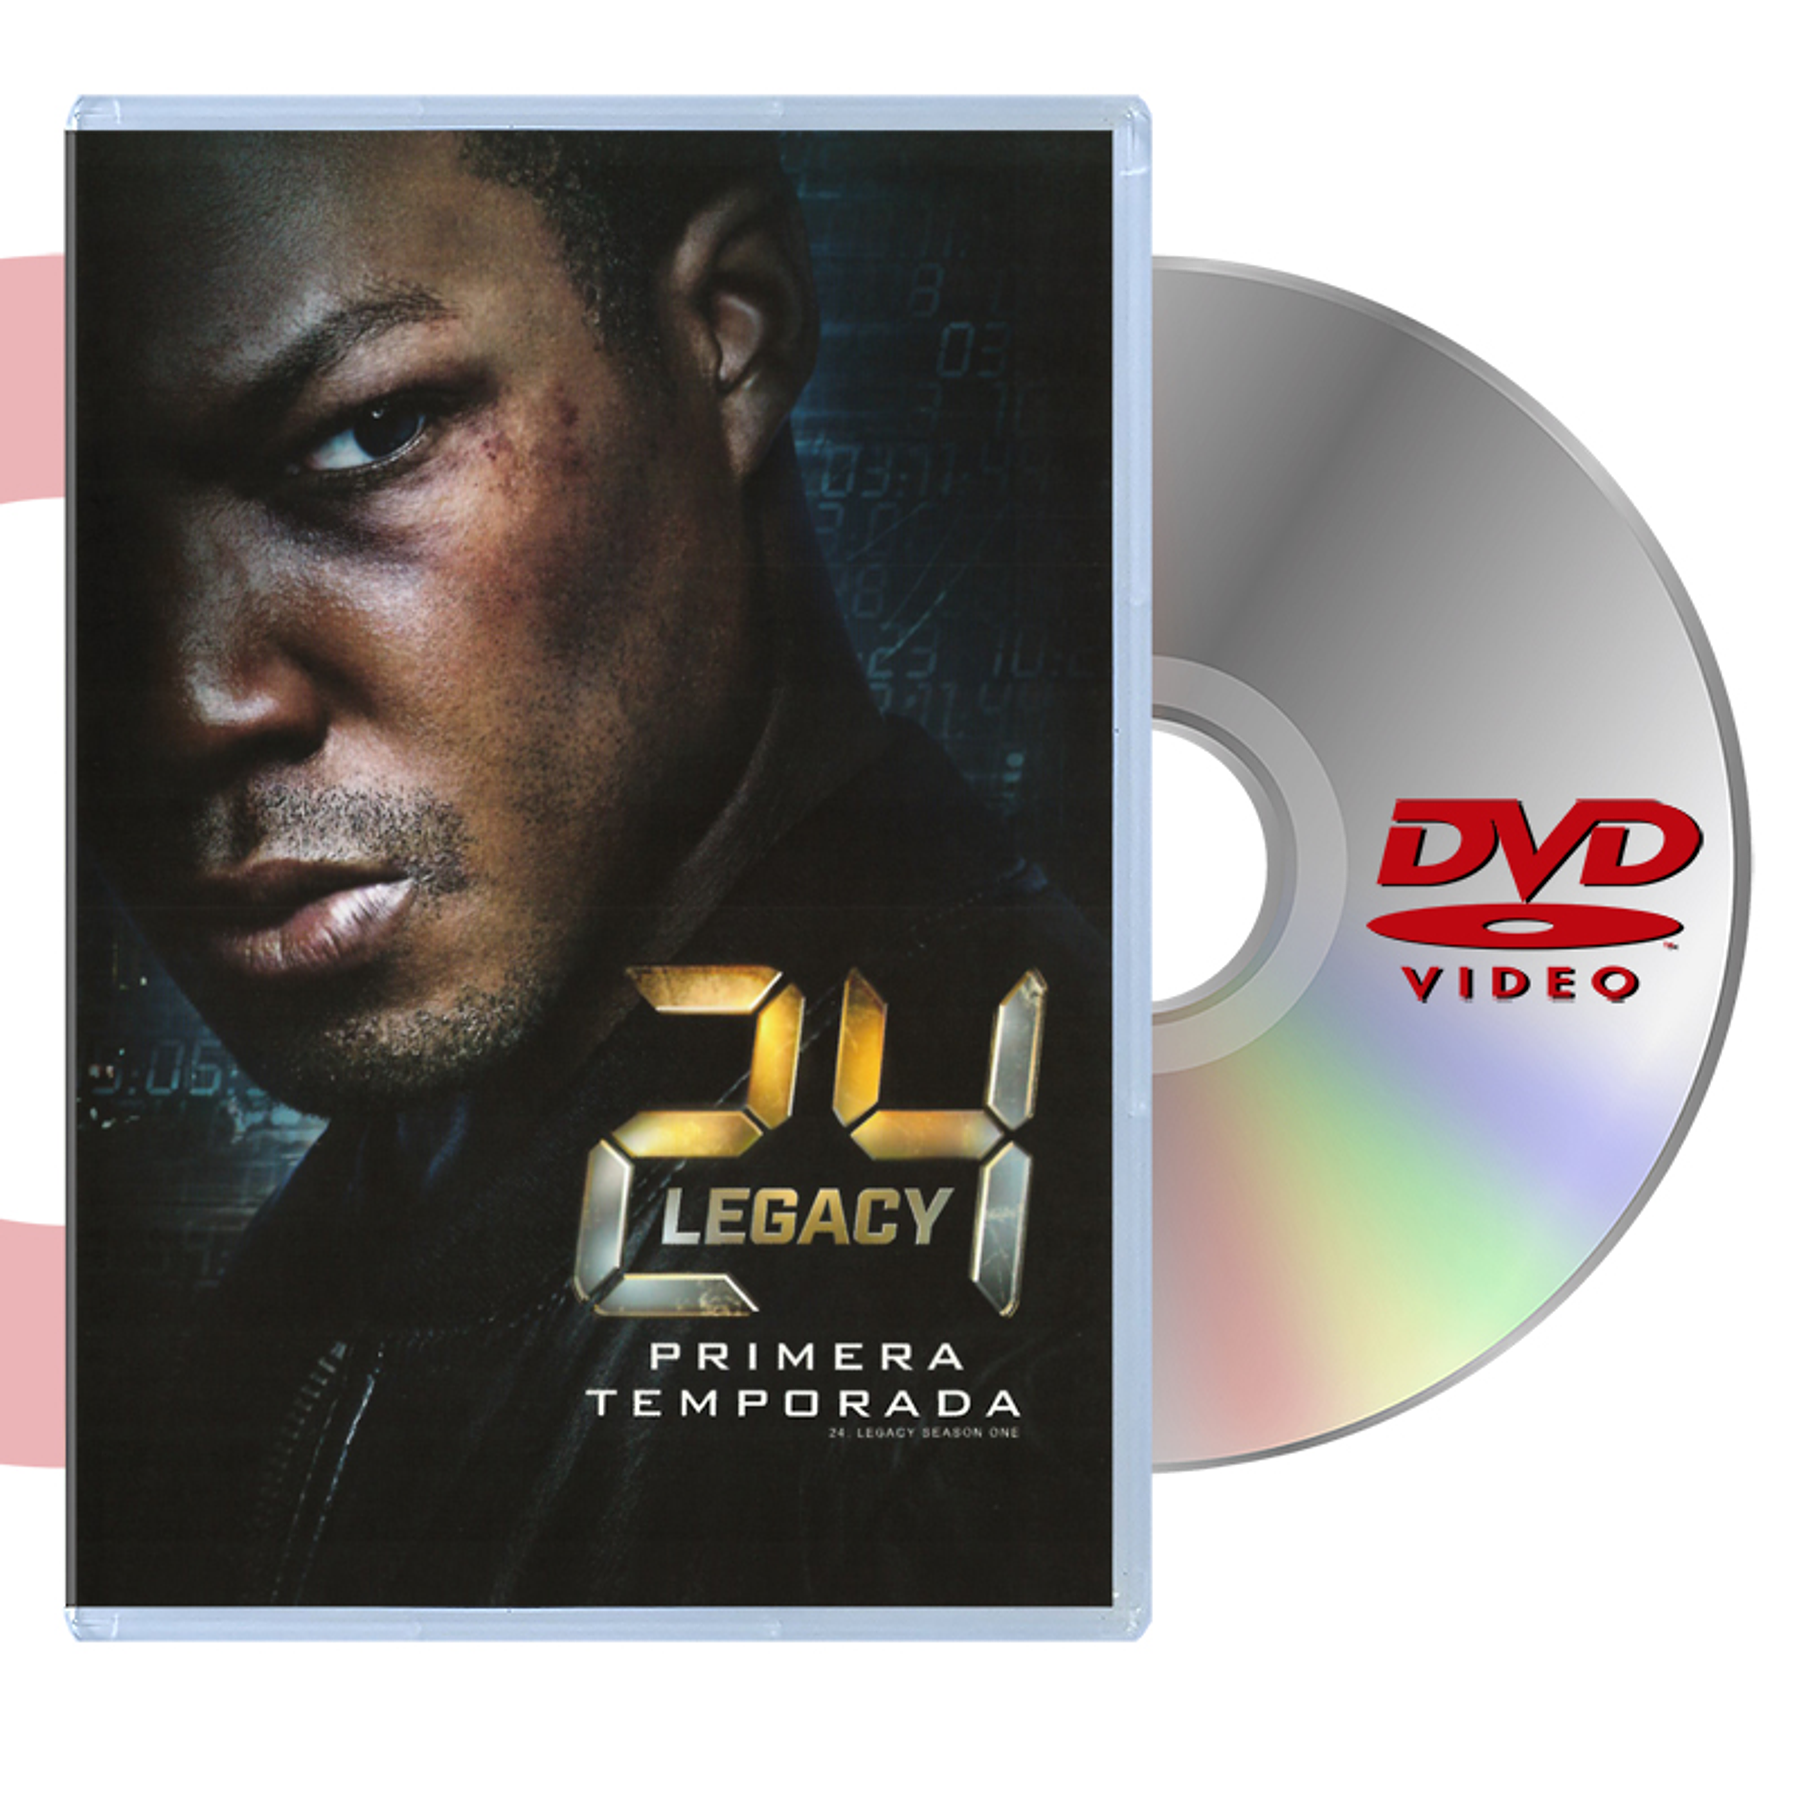 DVD 24 LEGACY